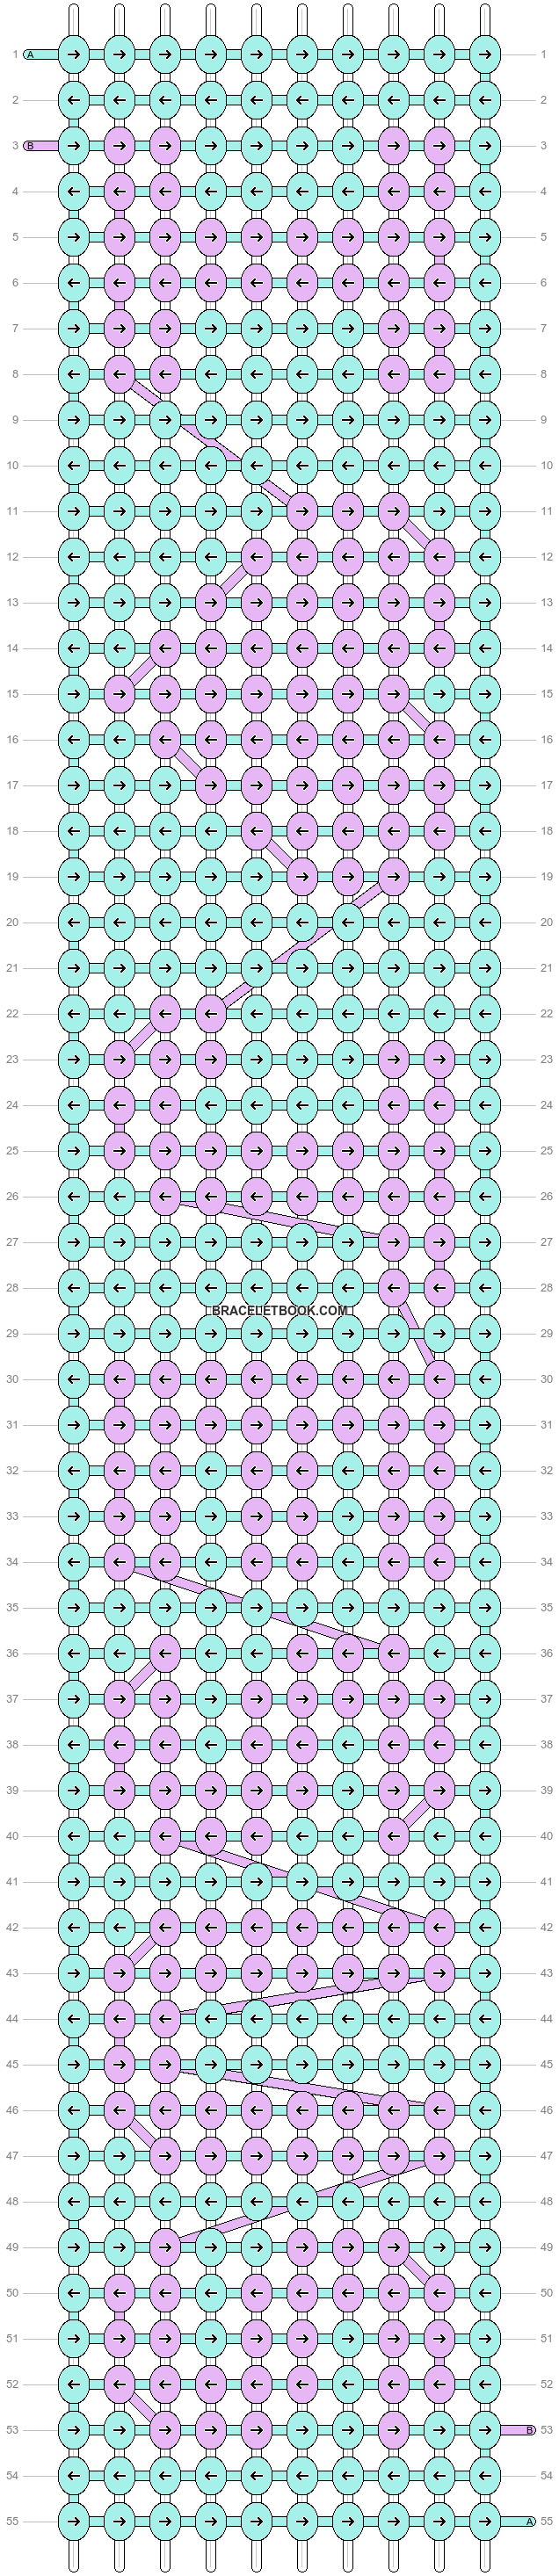 Alpha pattern #19594 variation #230325 pattern